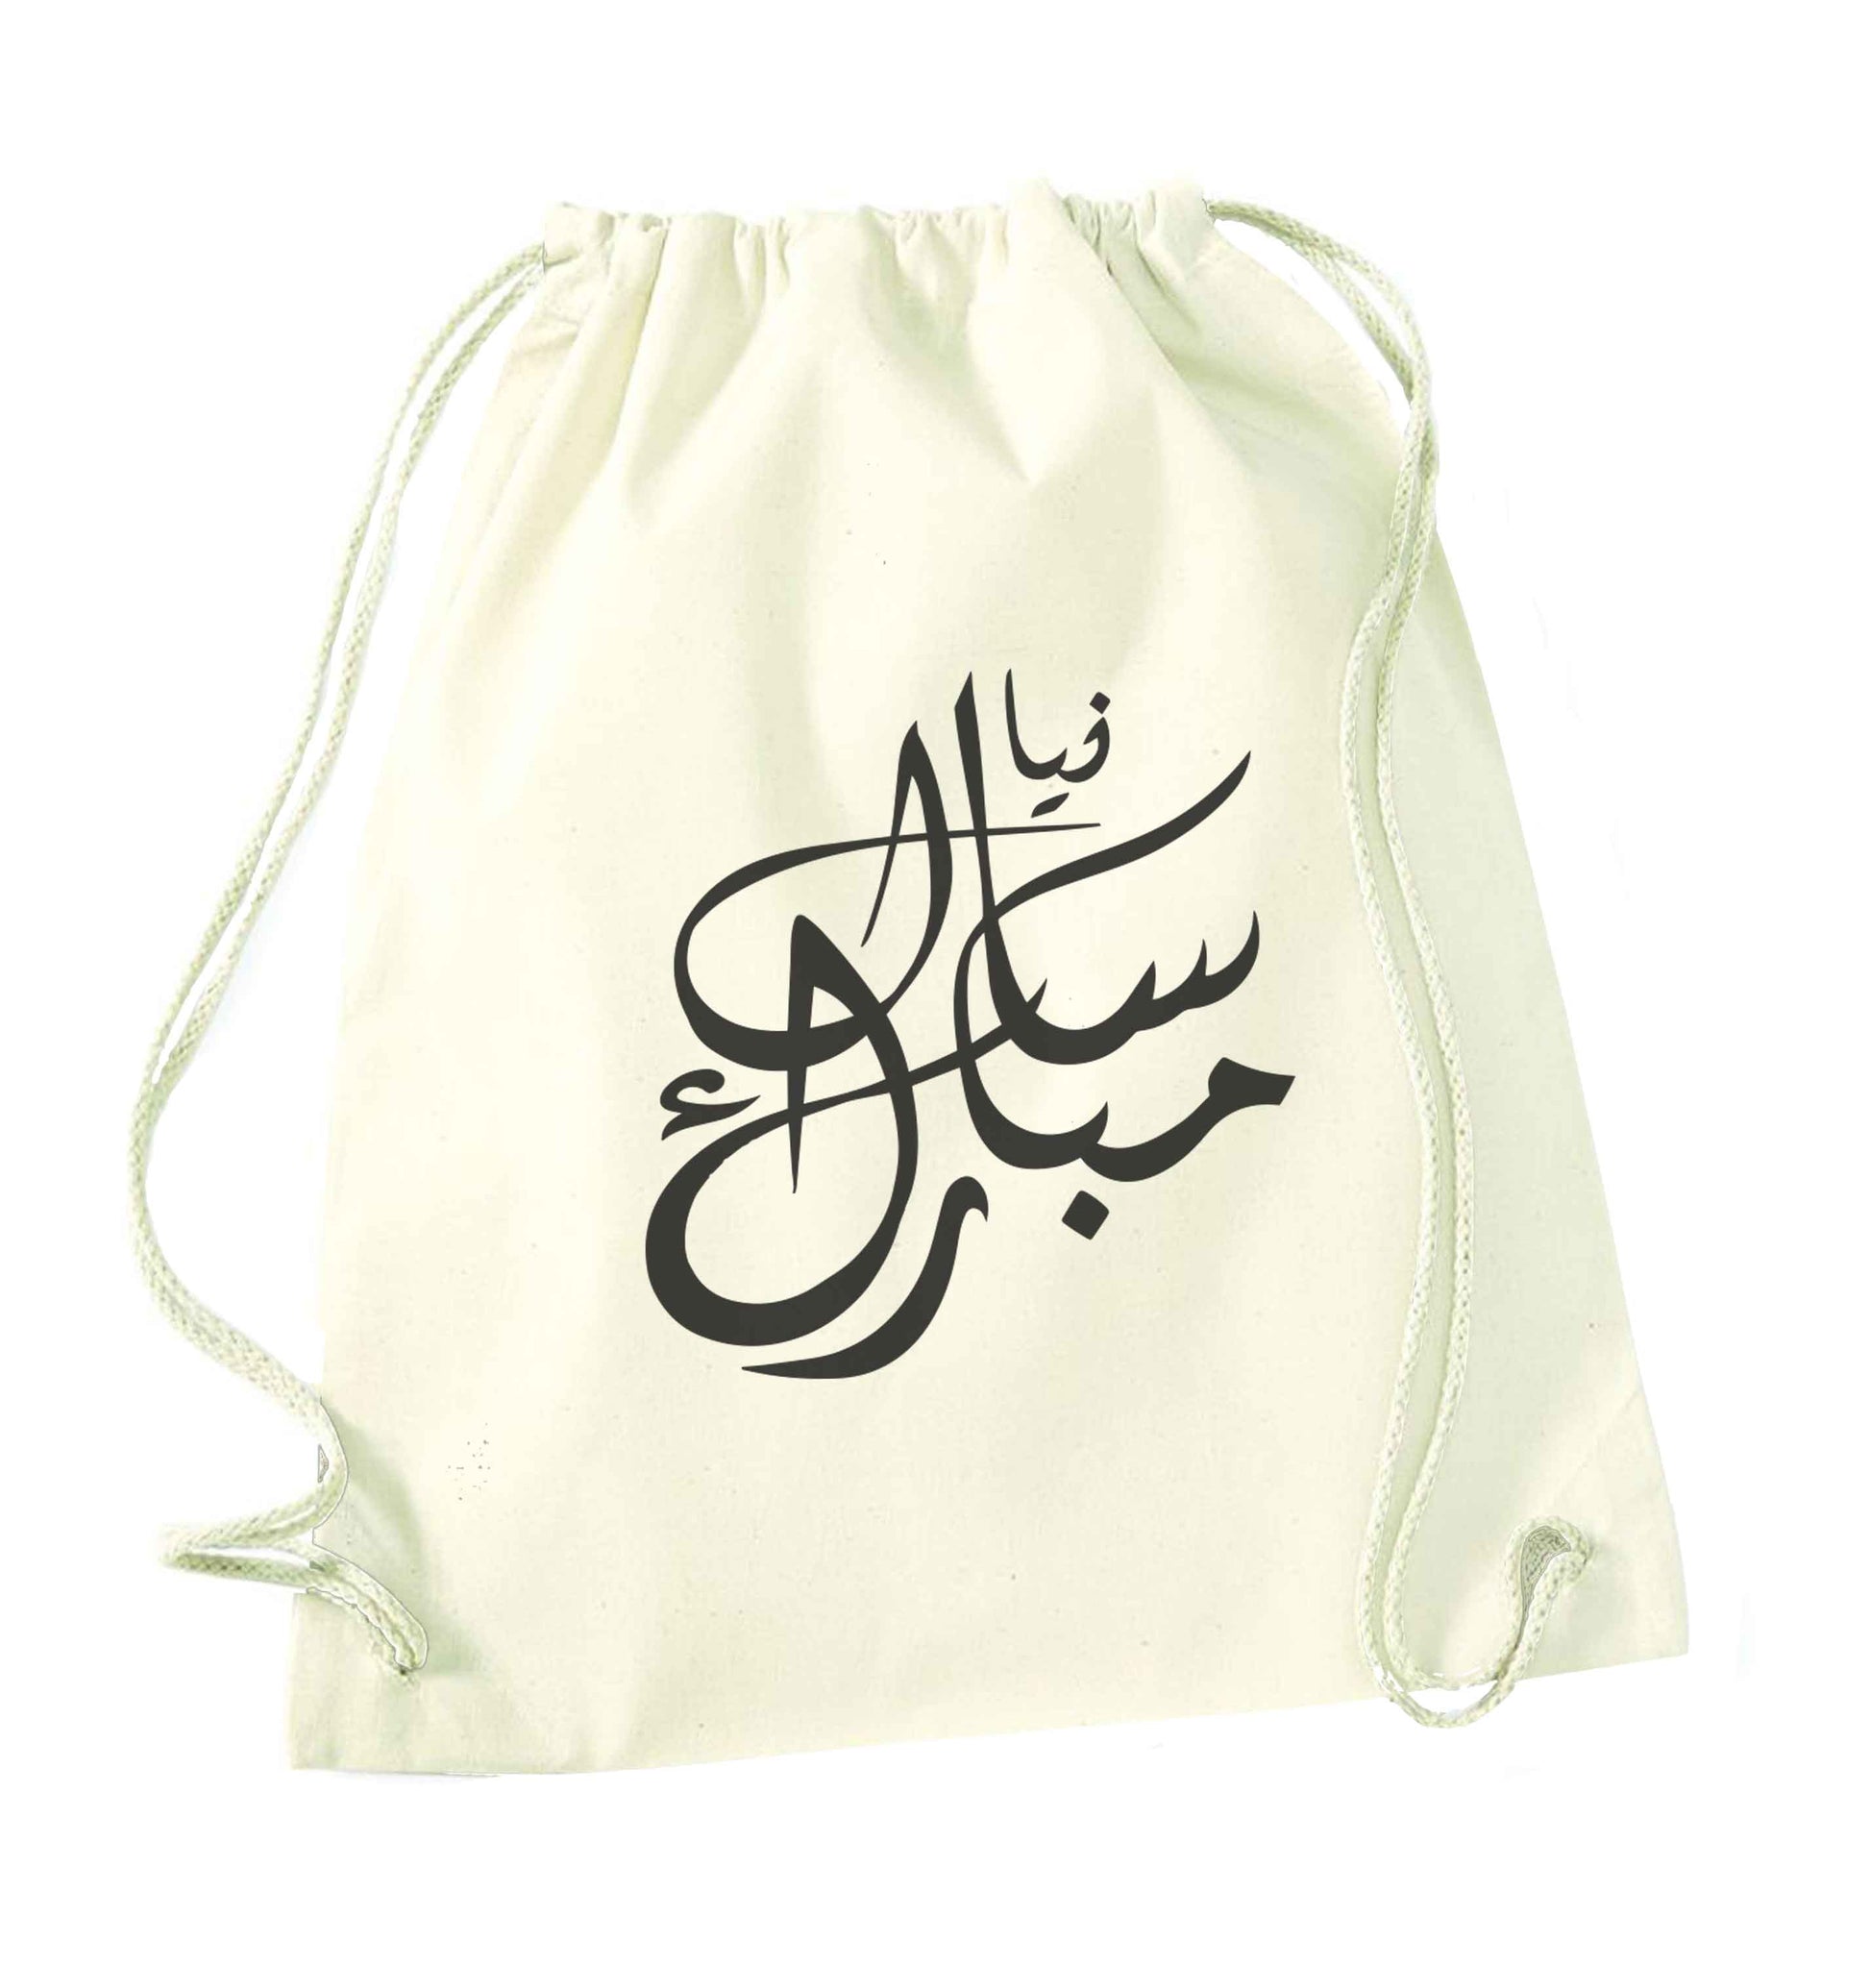 Urdu Naya saal mubarak natural drawstring bag